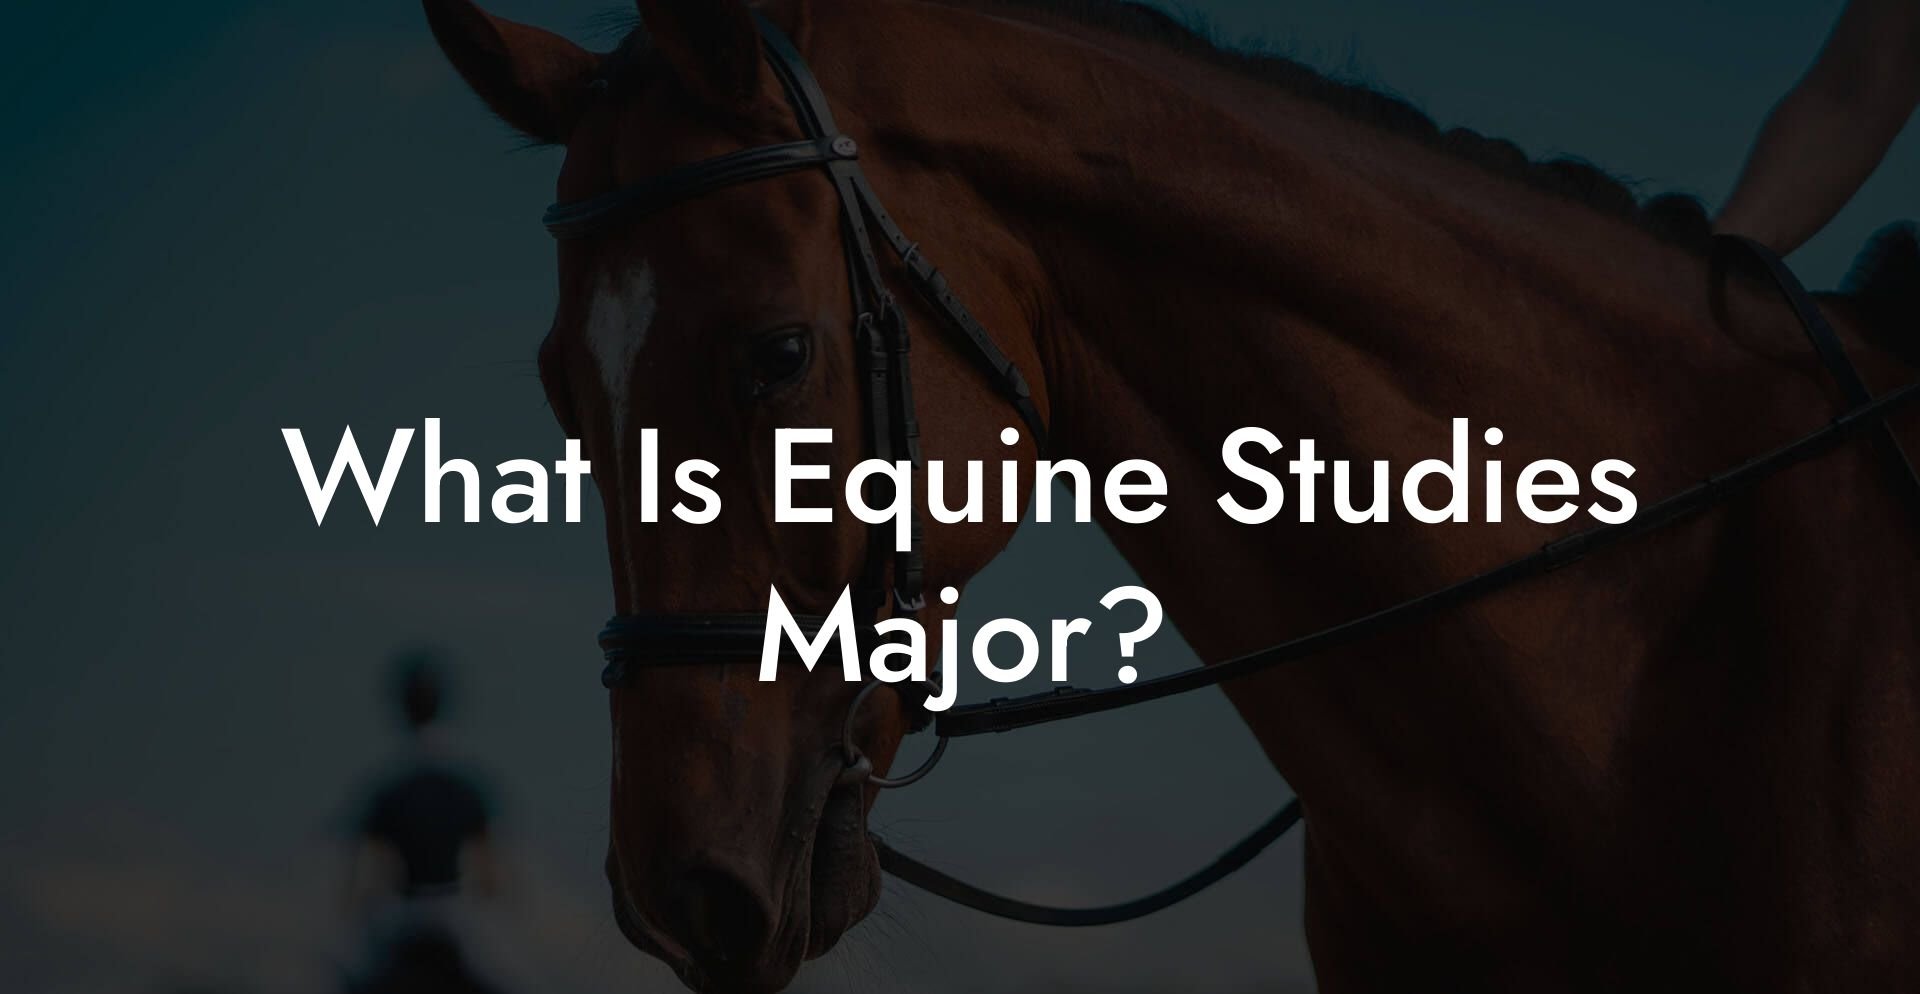 What Is Equine Studies Major?